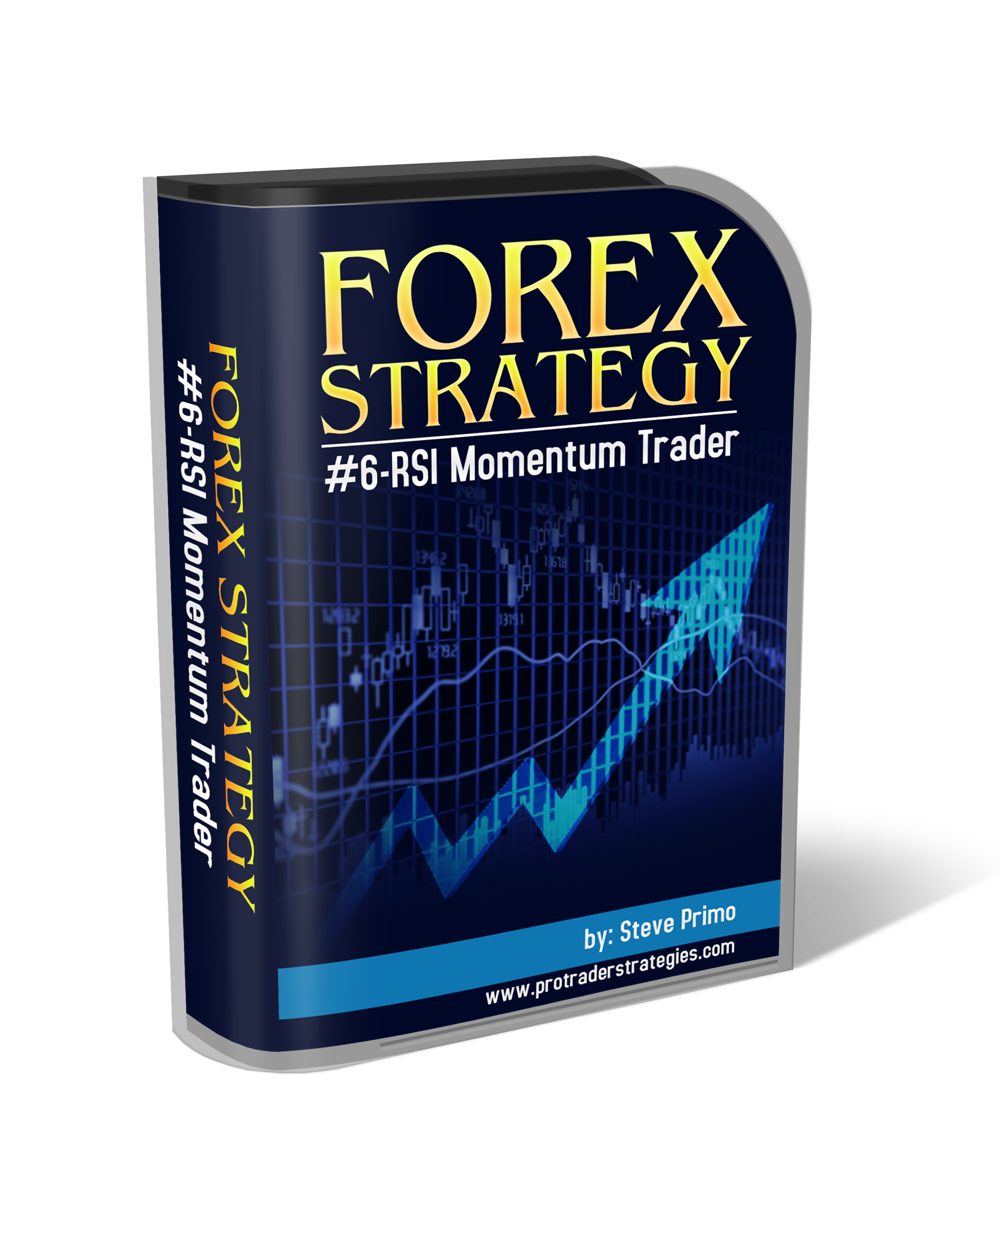 Momentum trading forex